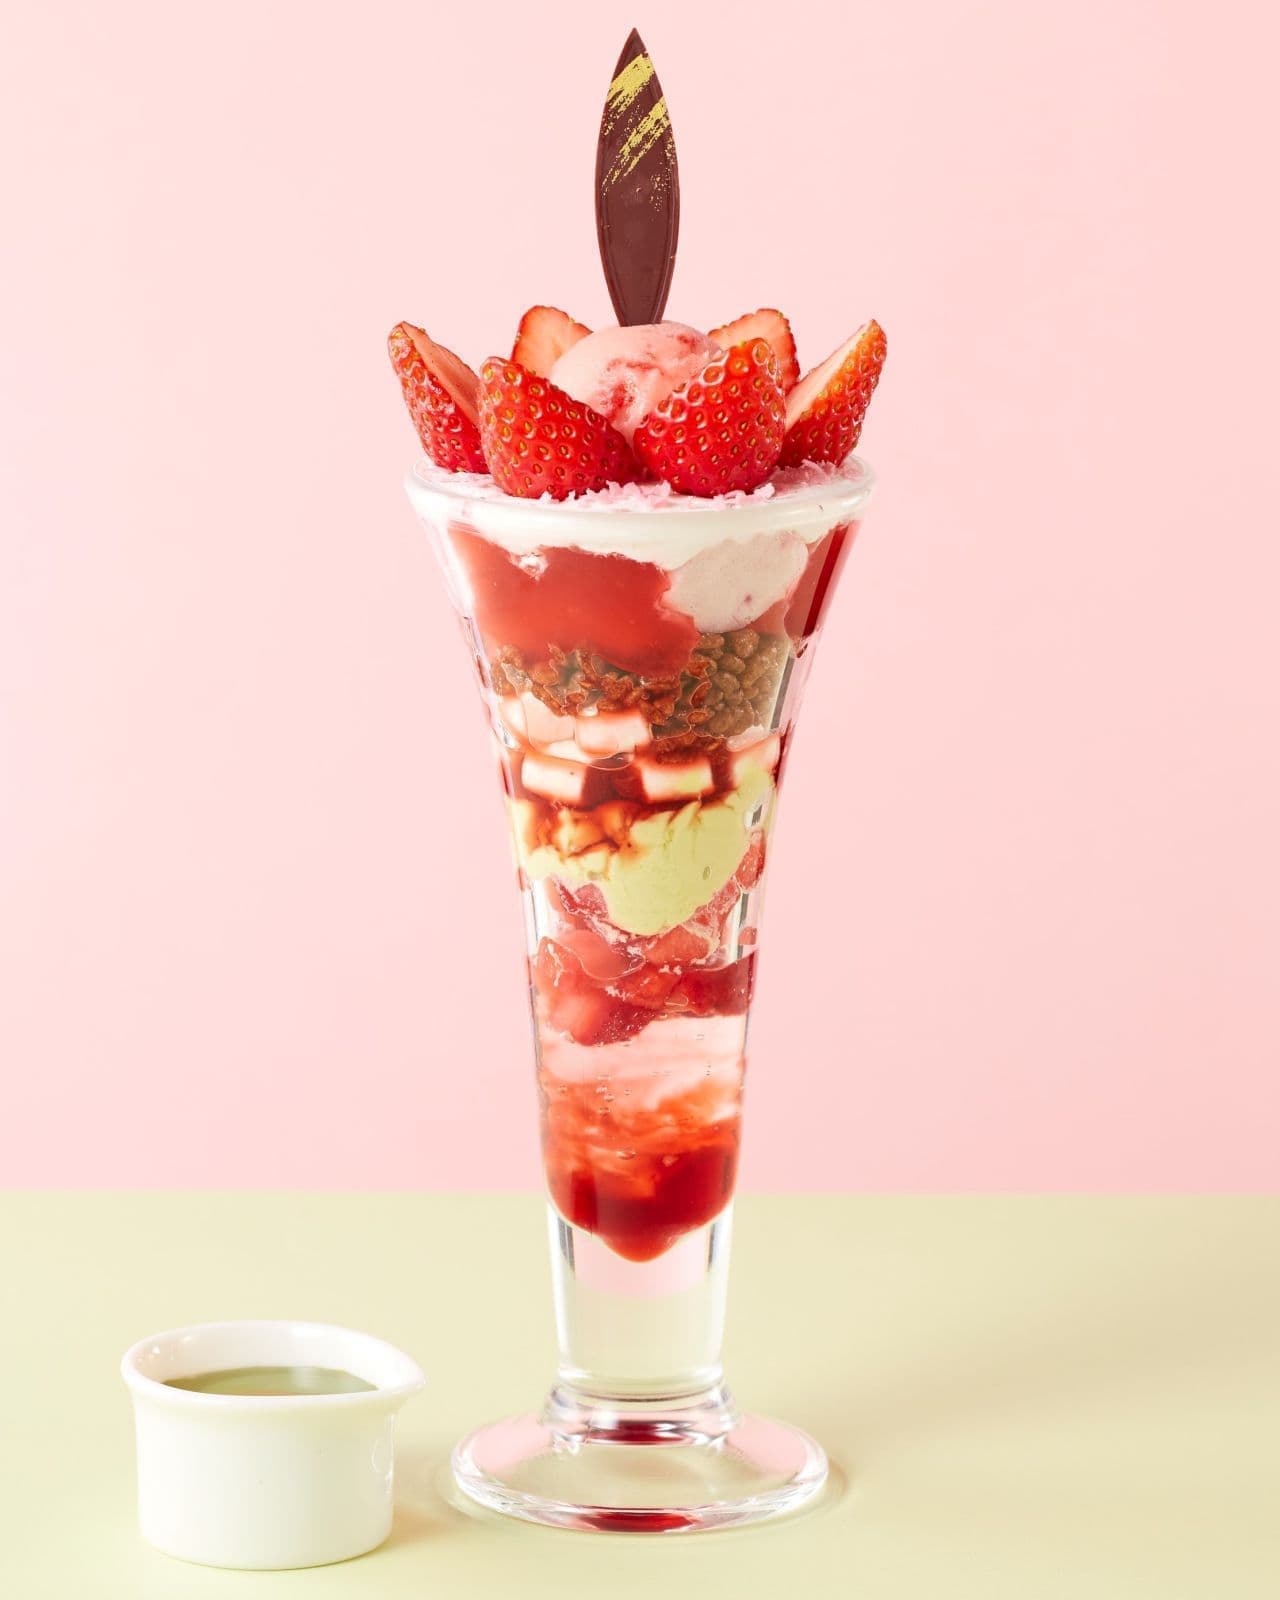 Cocos: "Strawberry and Pistachio Flowering Parfait